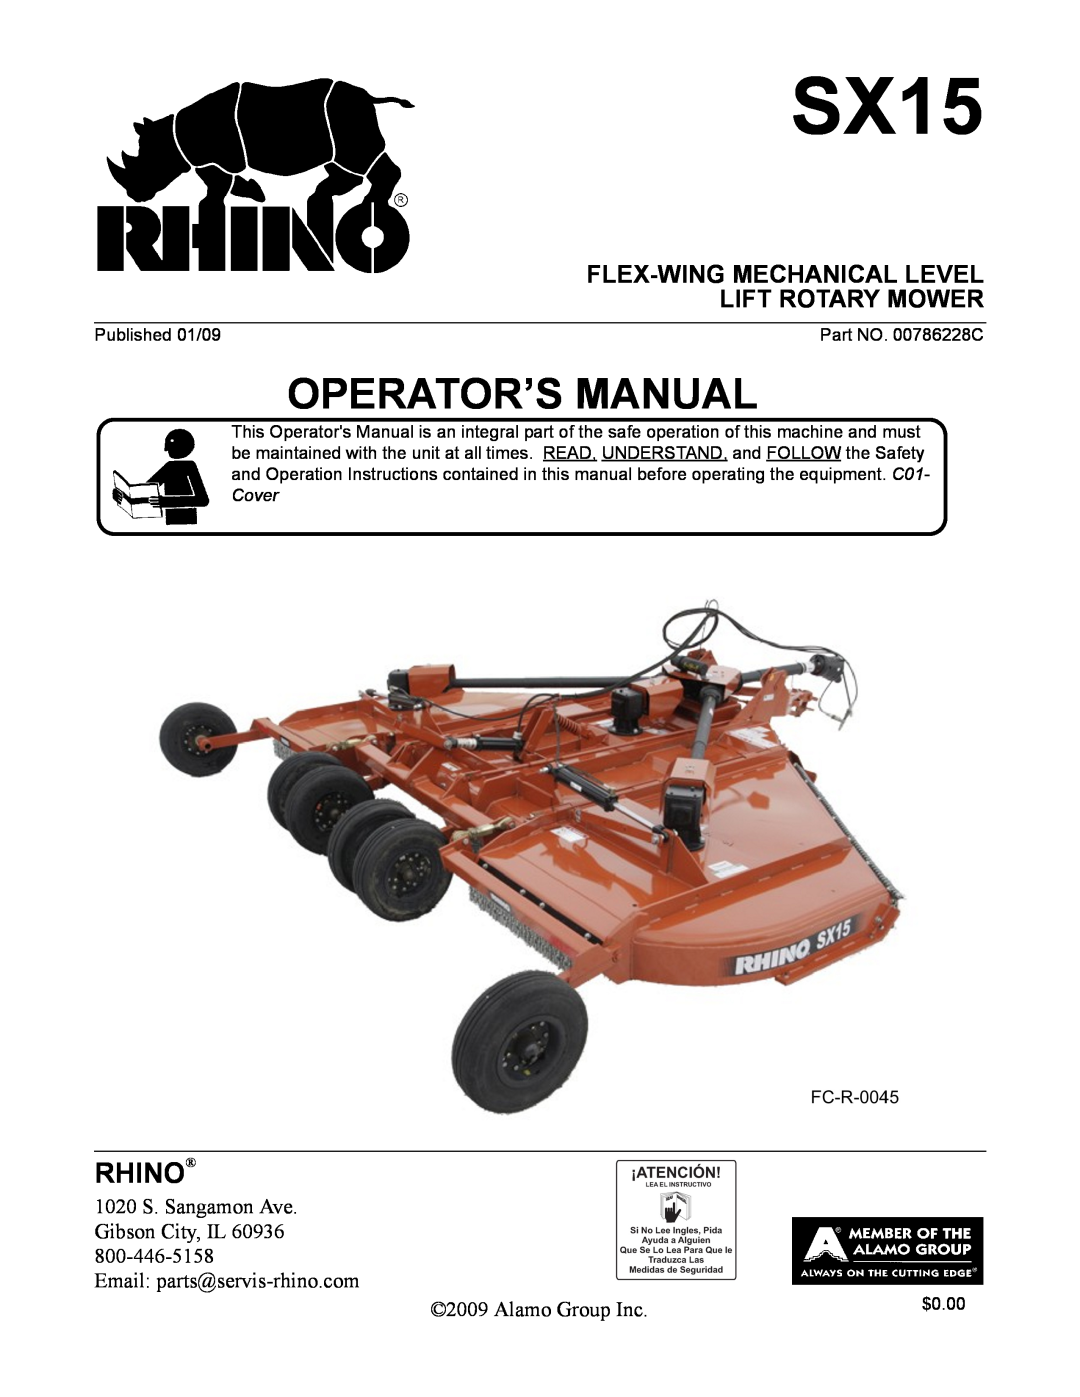 Alamo SX15 manual Rhino, Flex-Wing Mechanical Level Lift Rotary Mower, Operator’S Manual 